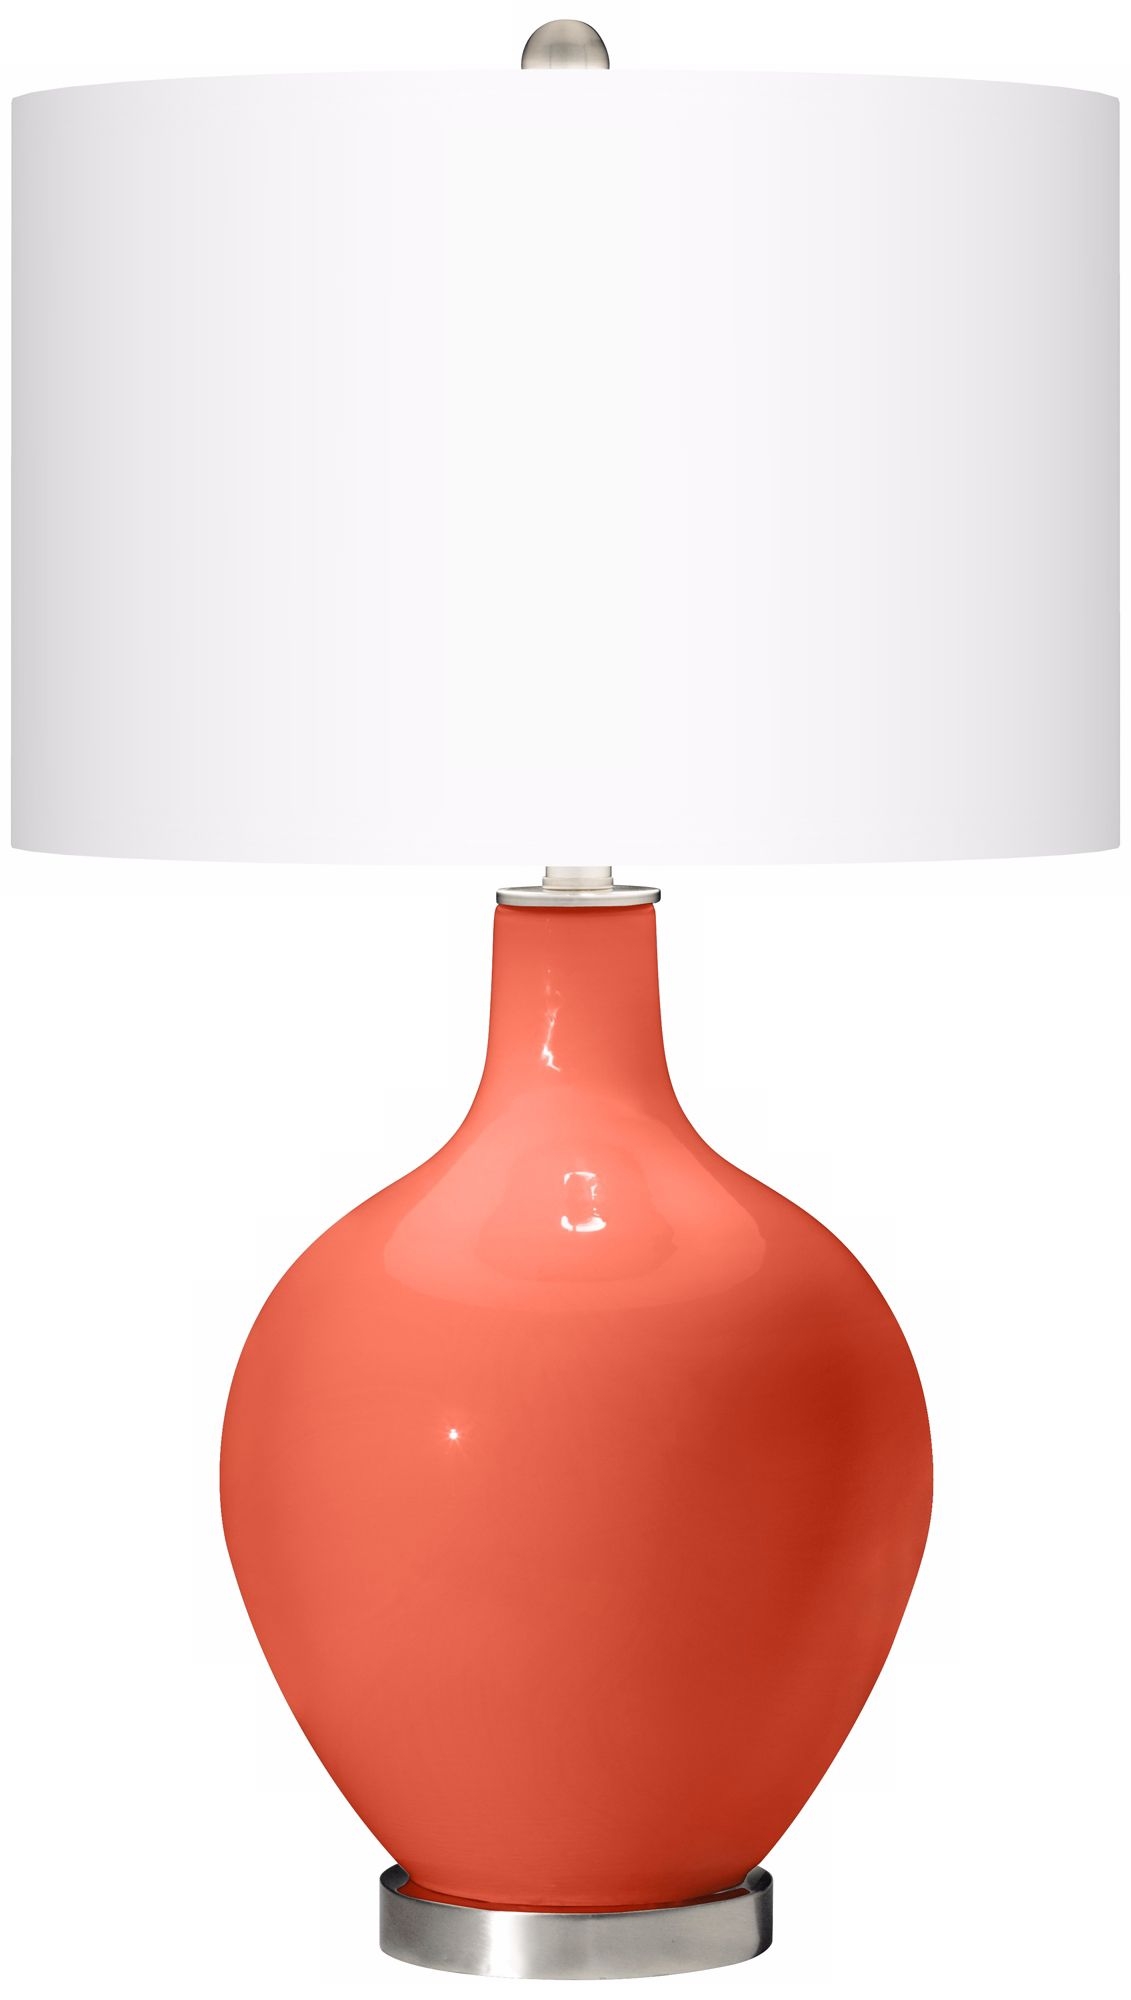 Daring Orange Ovo Table Lamp - Image 0